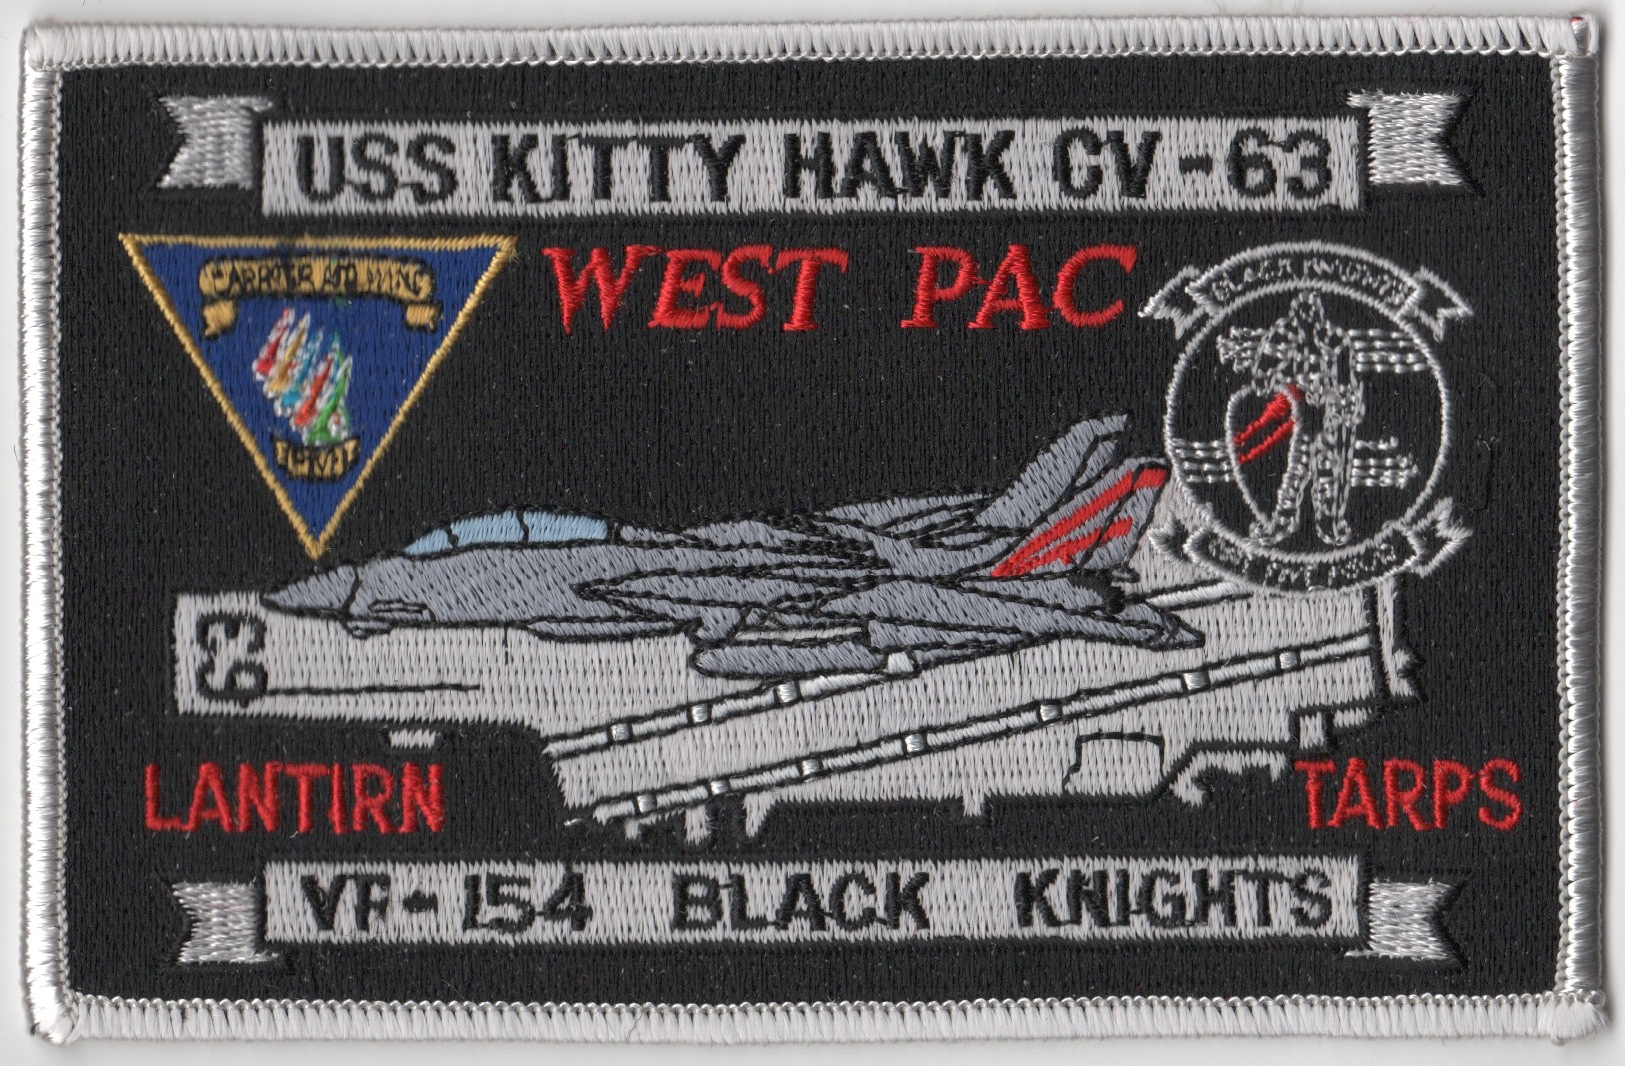 CV-63/VF-154 WestPac/LANTIRN/TARPS Patch